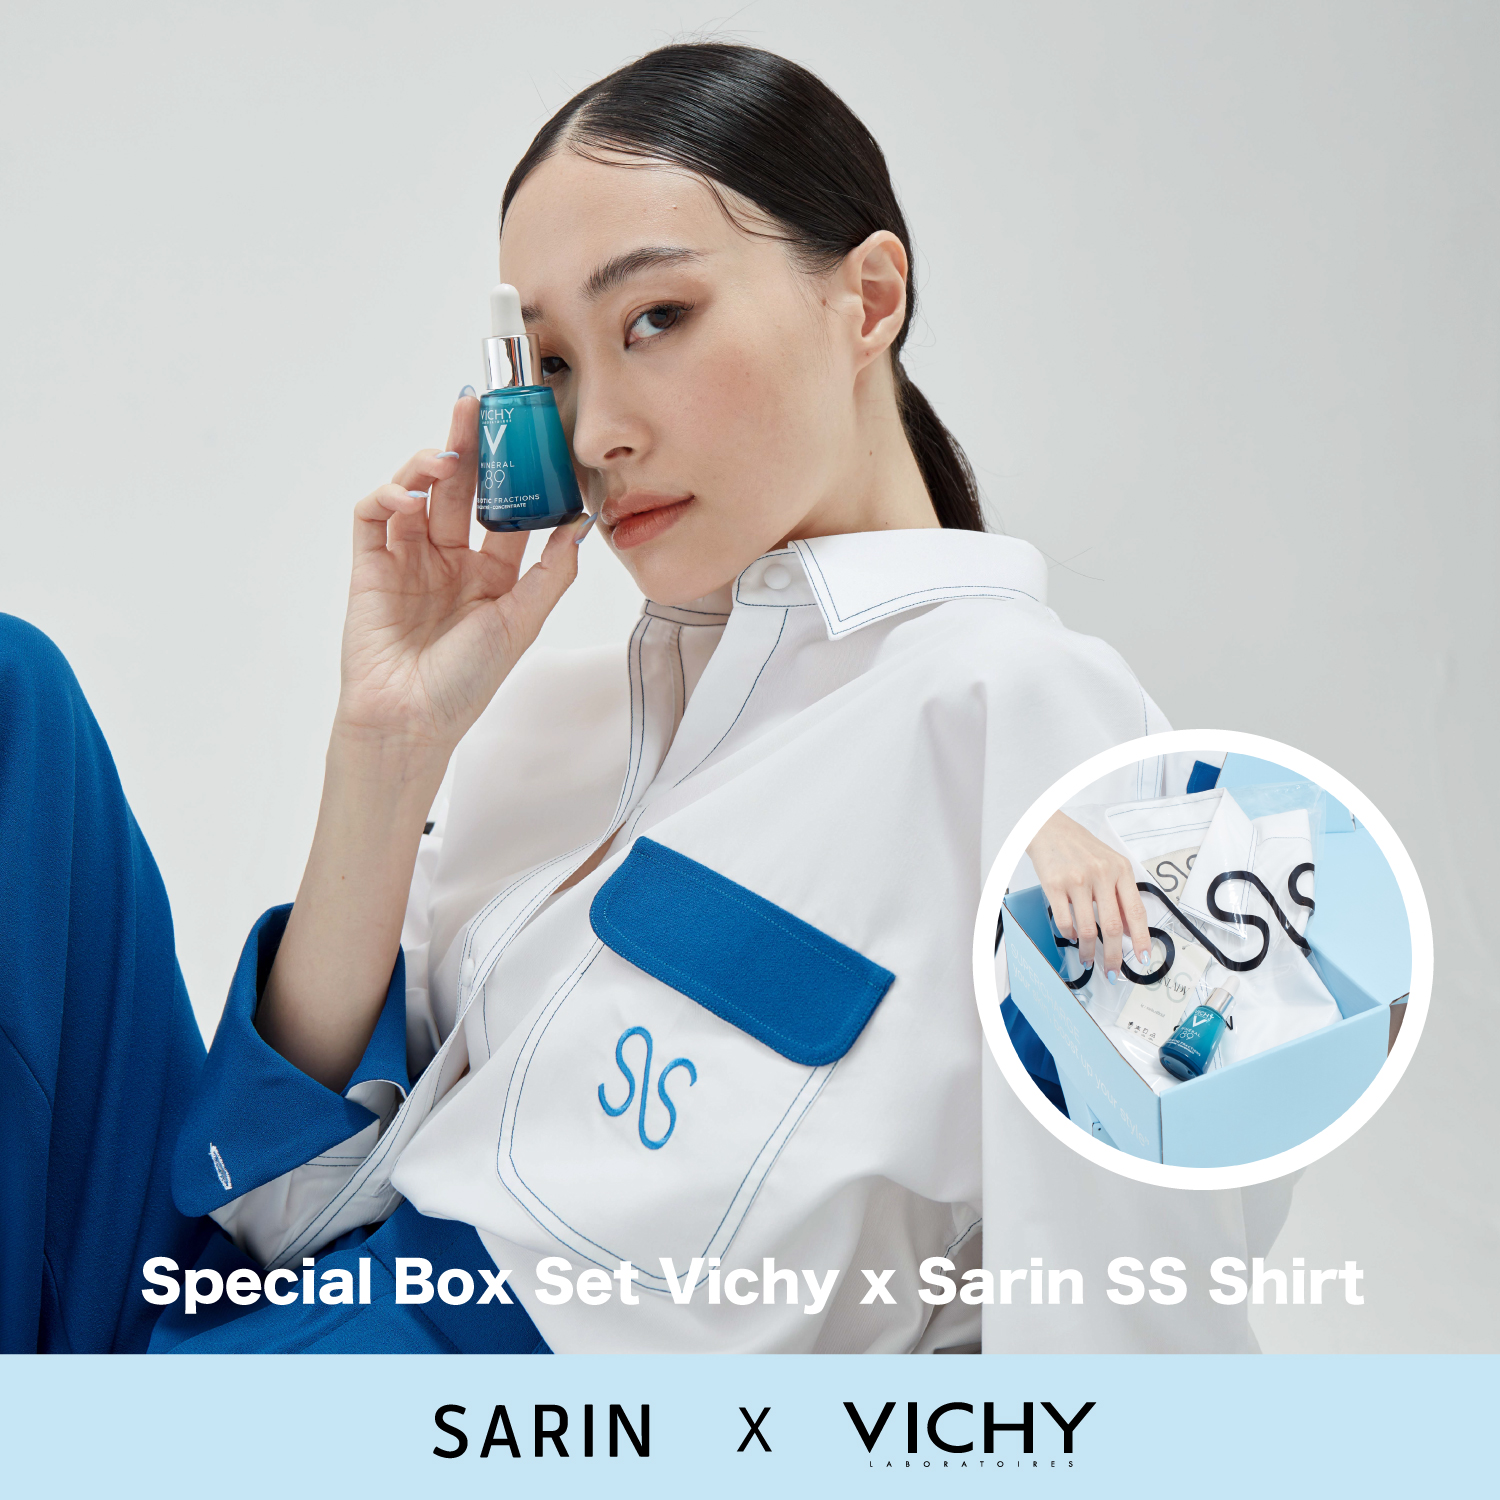 Special Box Set Vichy x Sarin SS Shirt